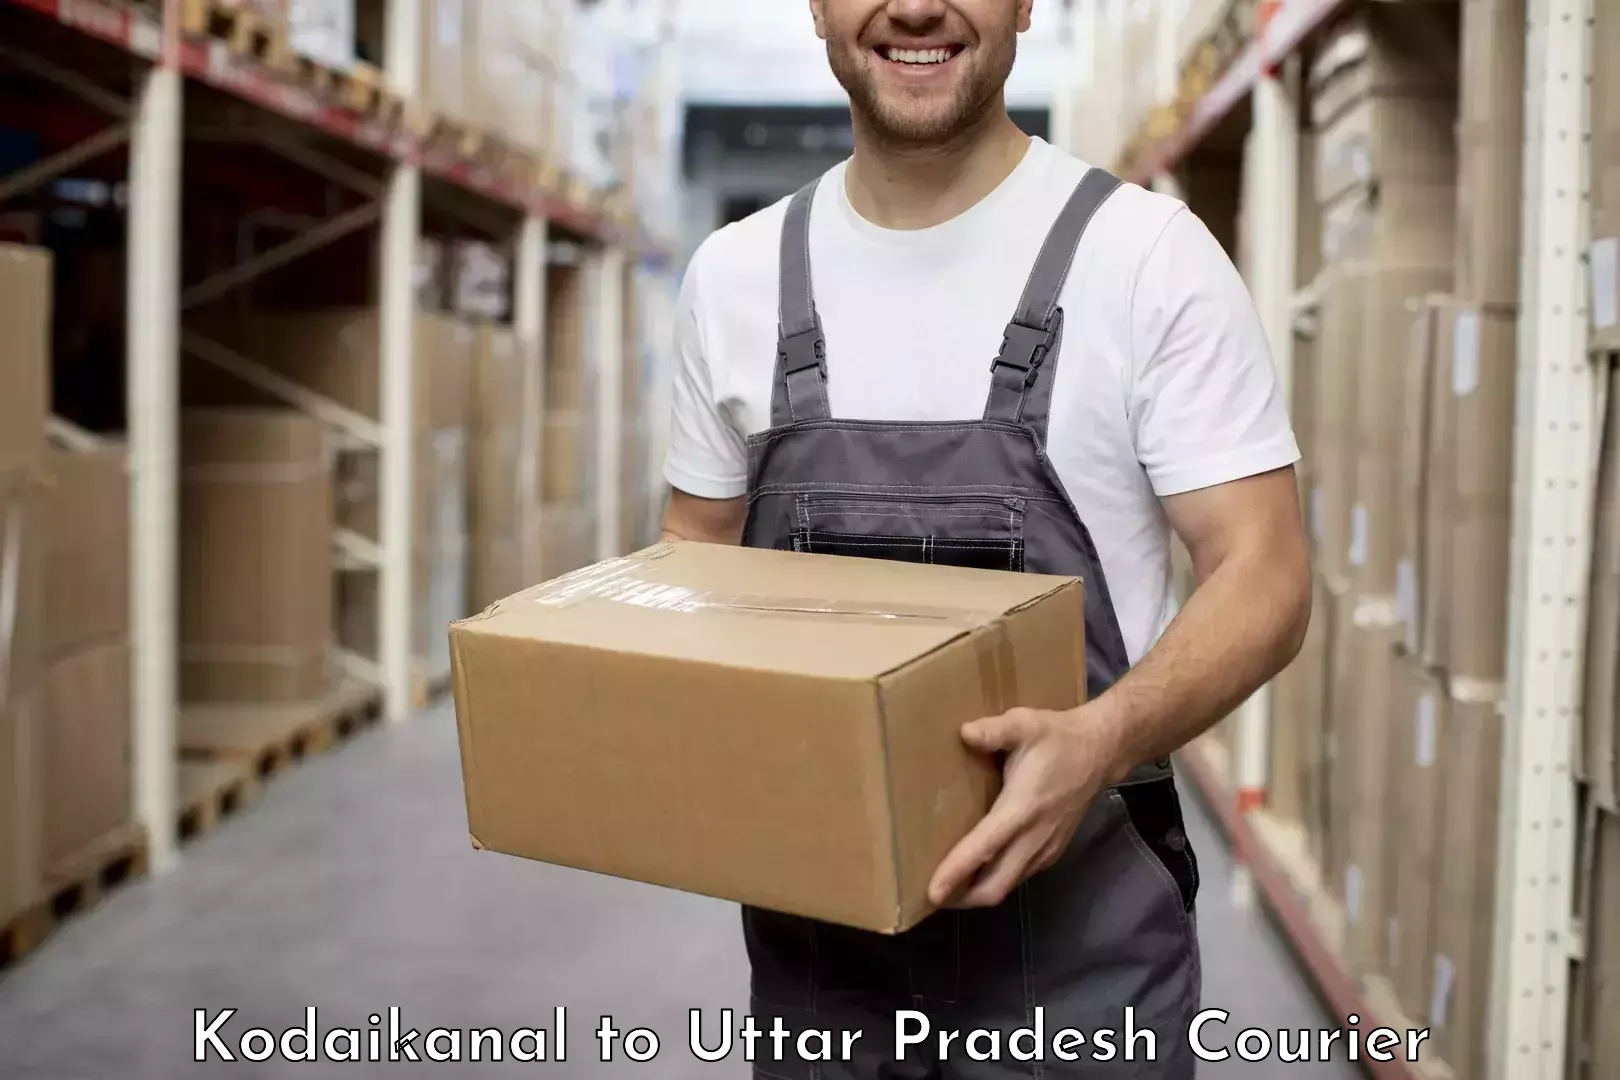 Professional courier handling Kodaikanal to Fatehpur